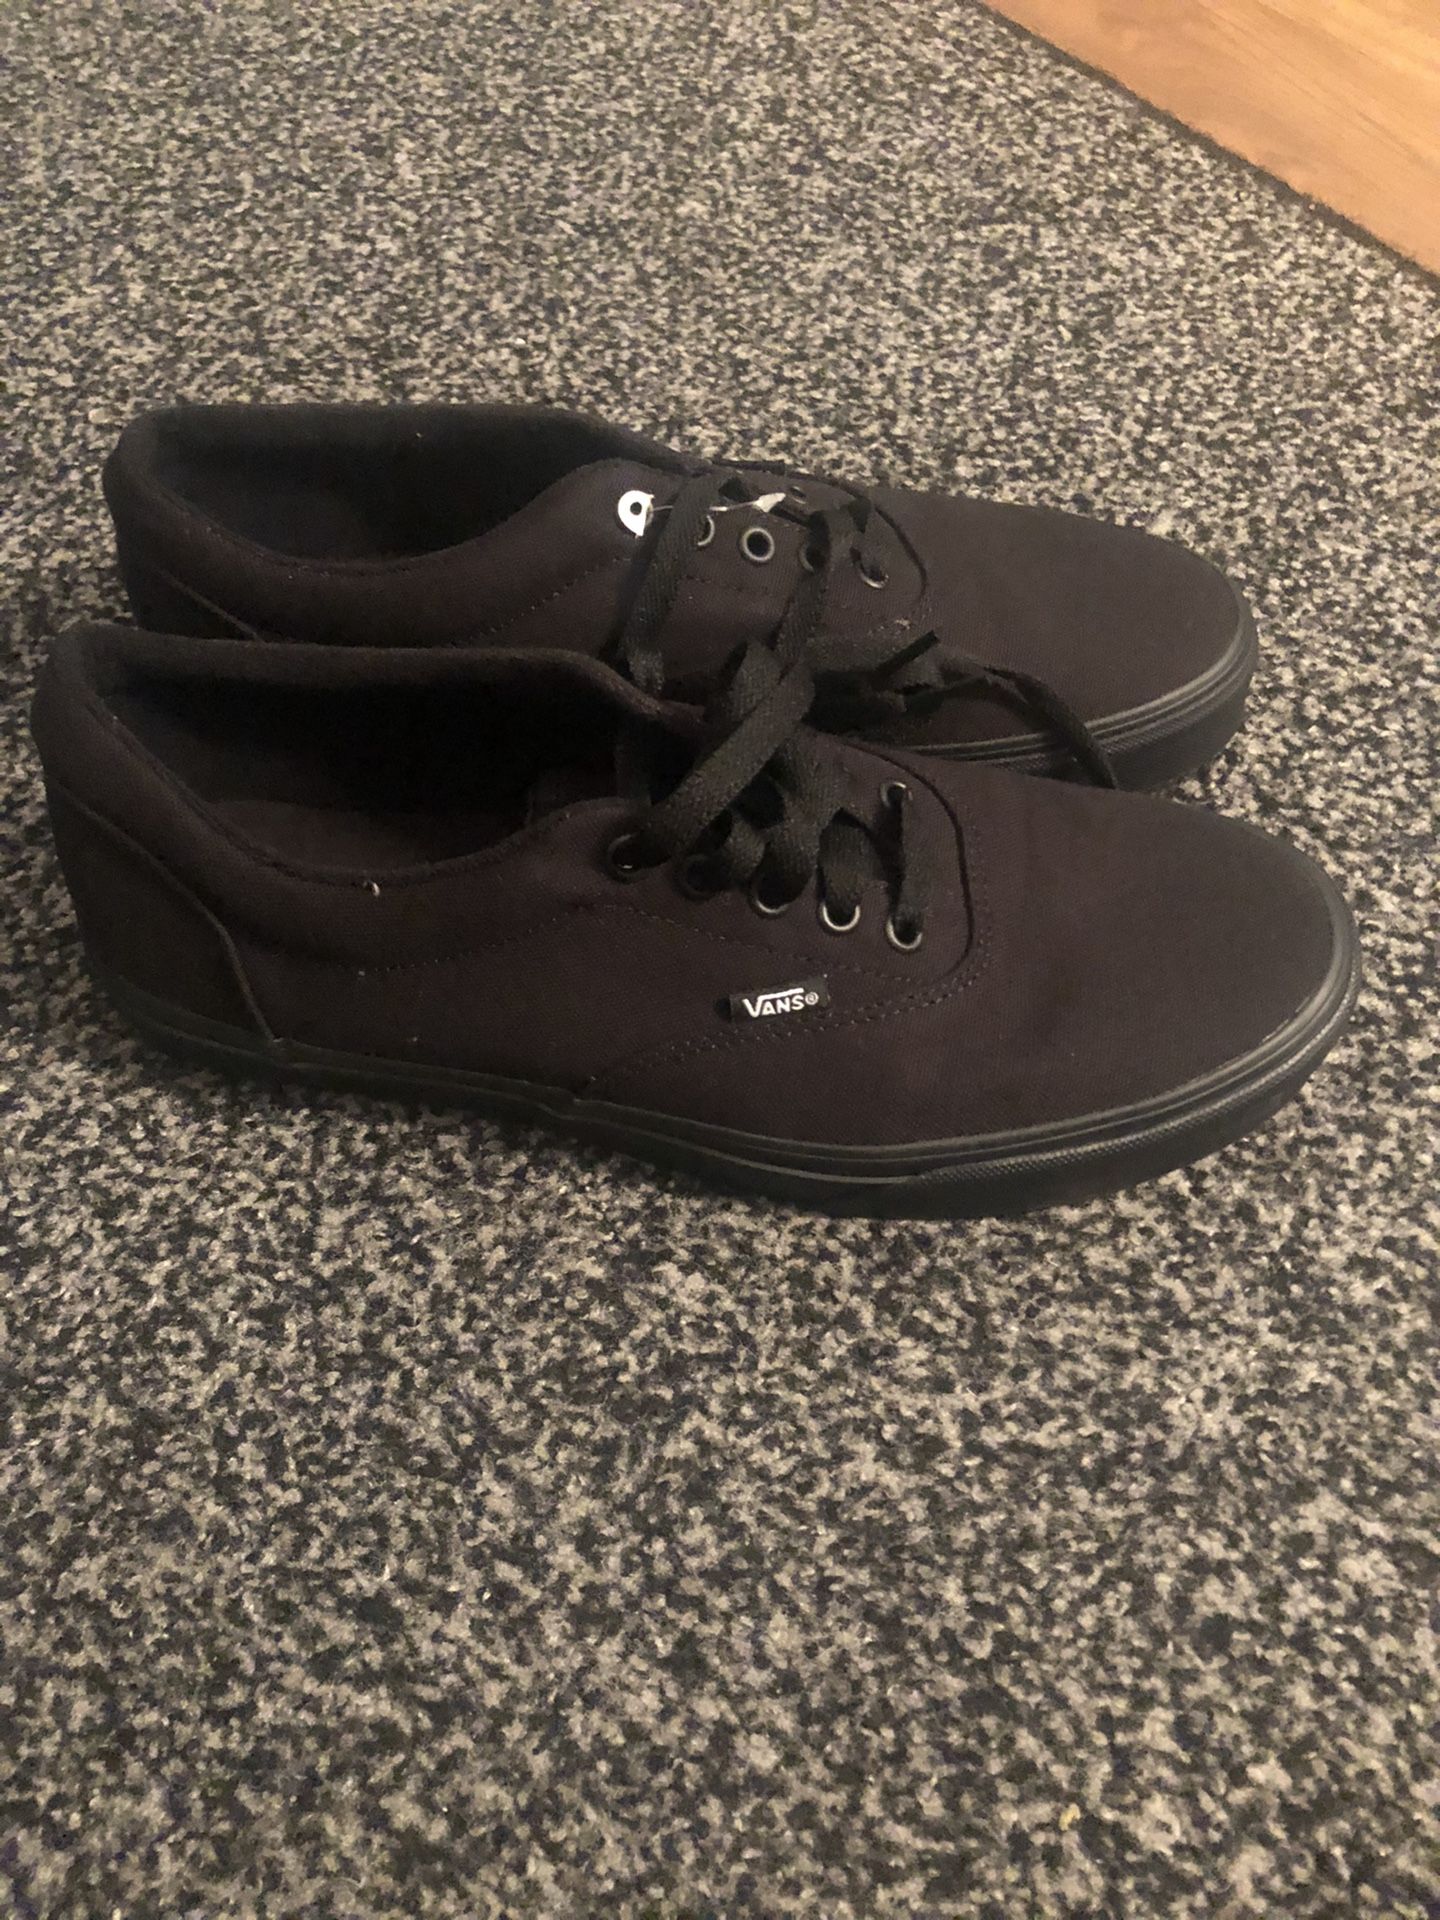 NEW Vans Men’s Skate Shoes Black Size 10.5